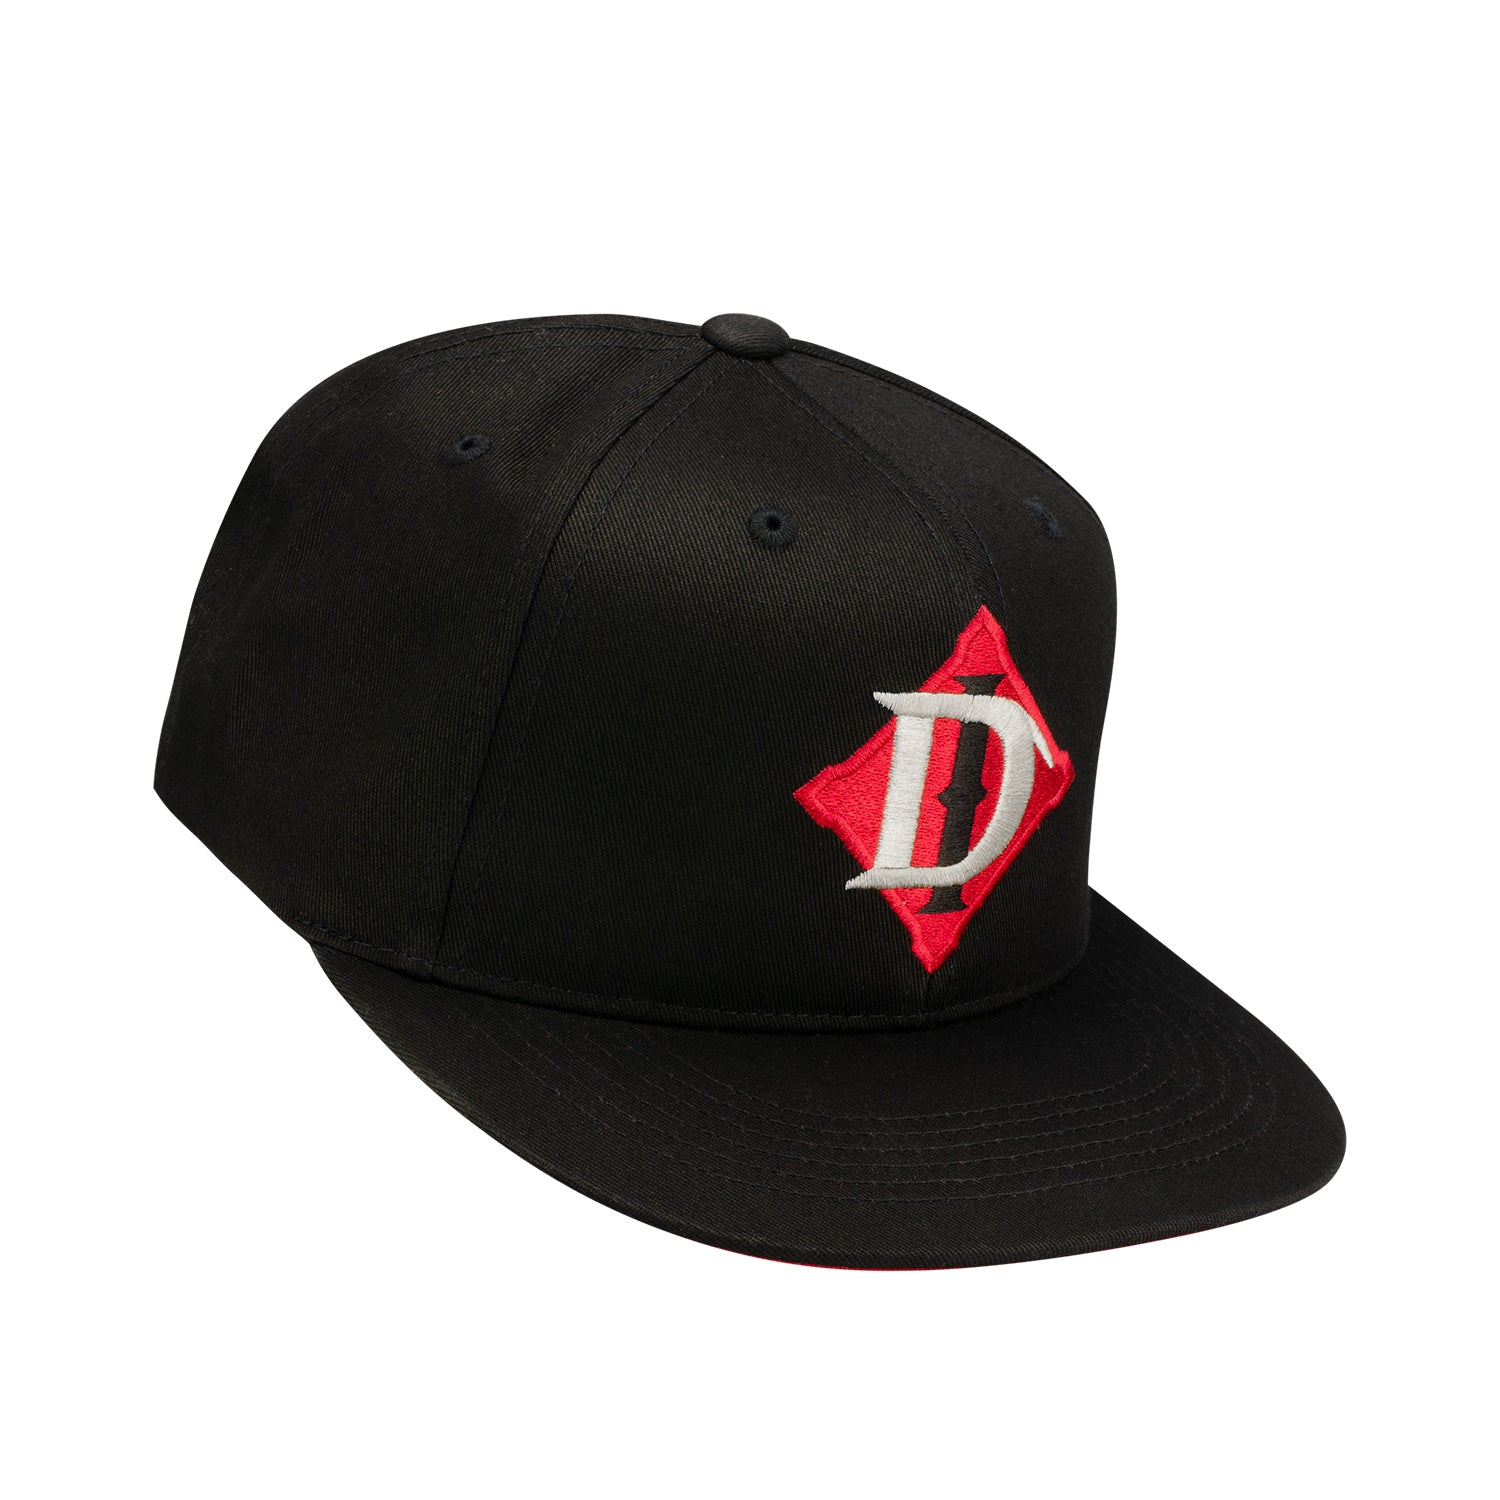 Diablo Immortal Black Flatbill Snapback Hat - Right Side View with Diablo Immortal Logo on Front